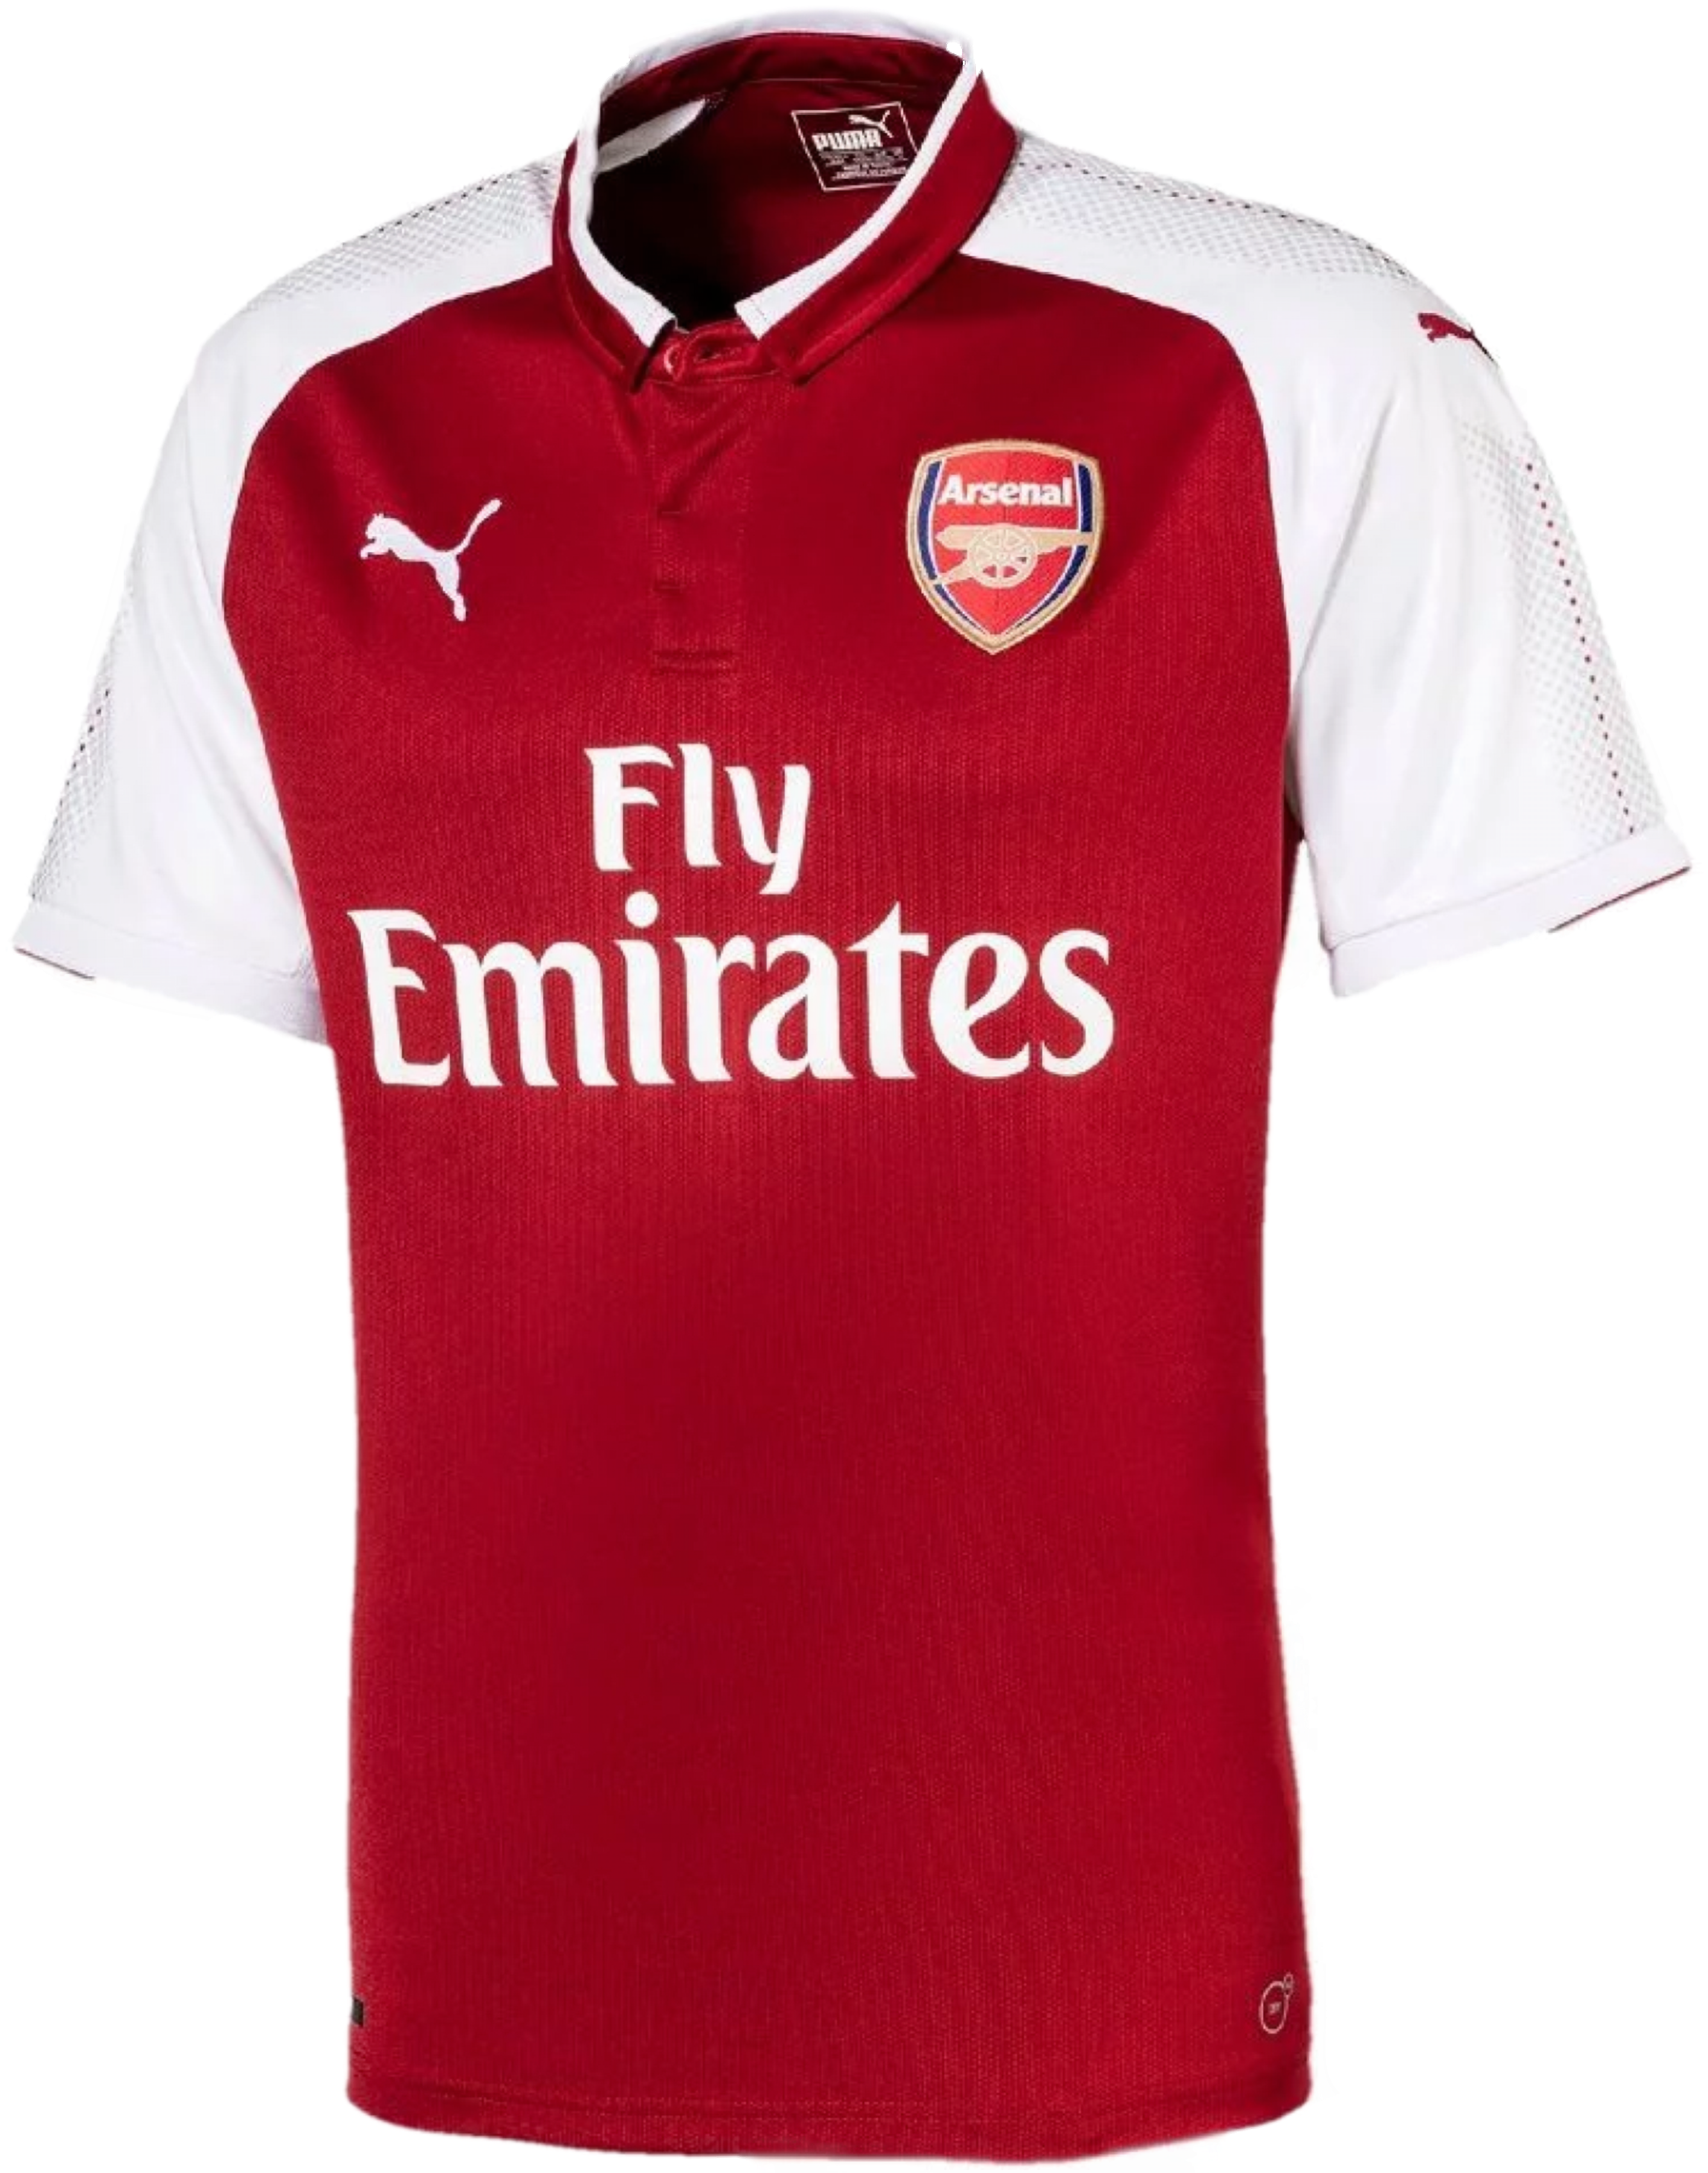 Arsenal Fly Emirates Jersey